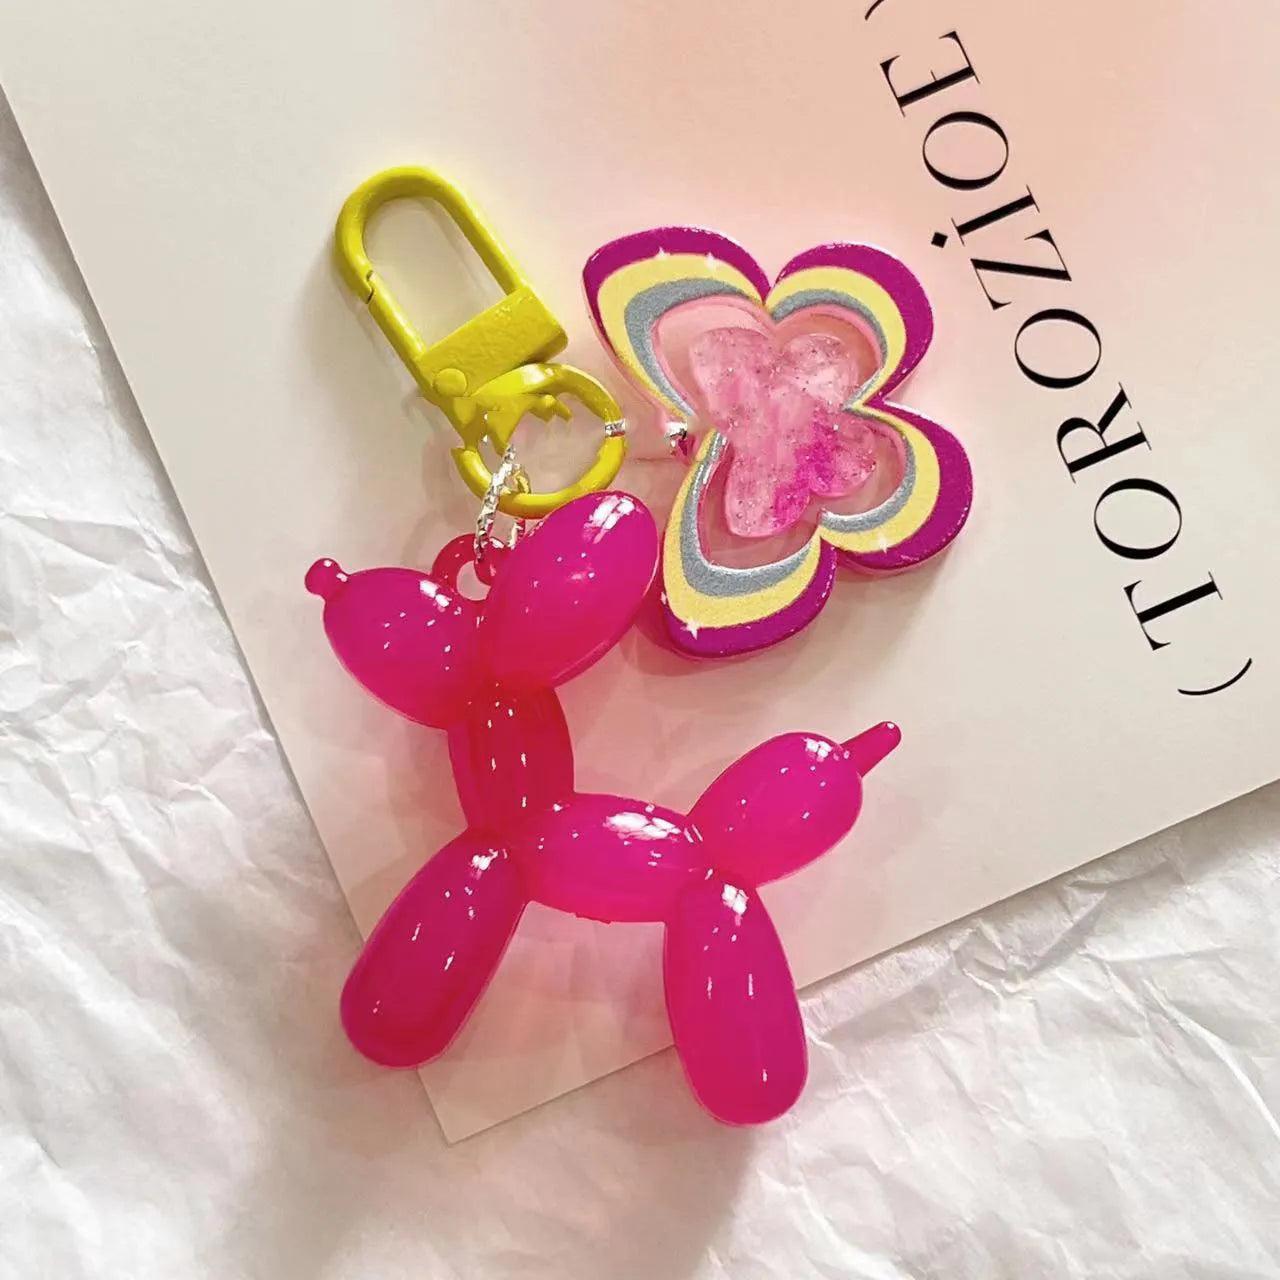 Sweet Kawaii Balloon Dog Keychain Set - Whimsical Ins Style Accessory for Girls  ourlum.com 2  